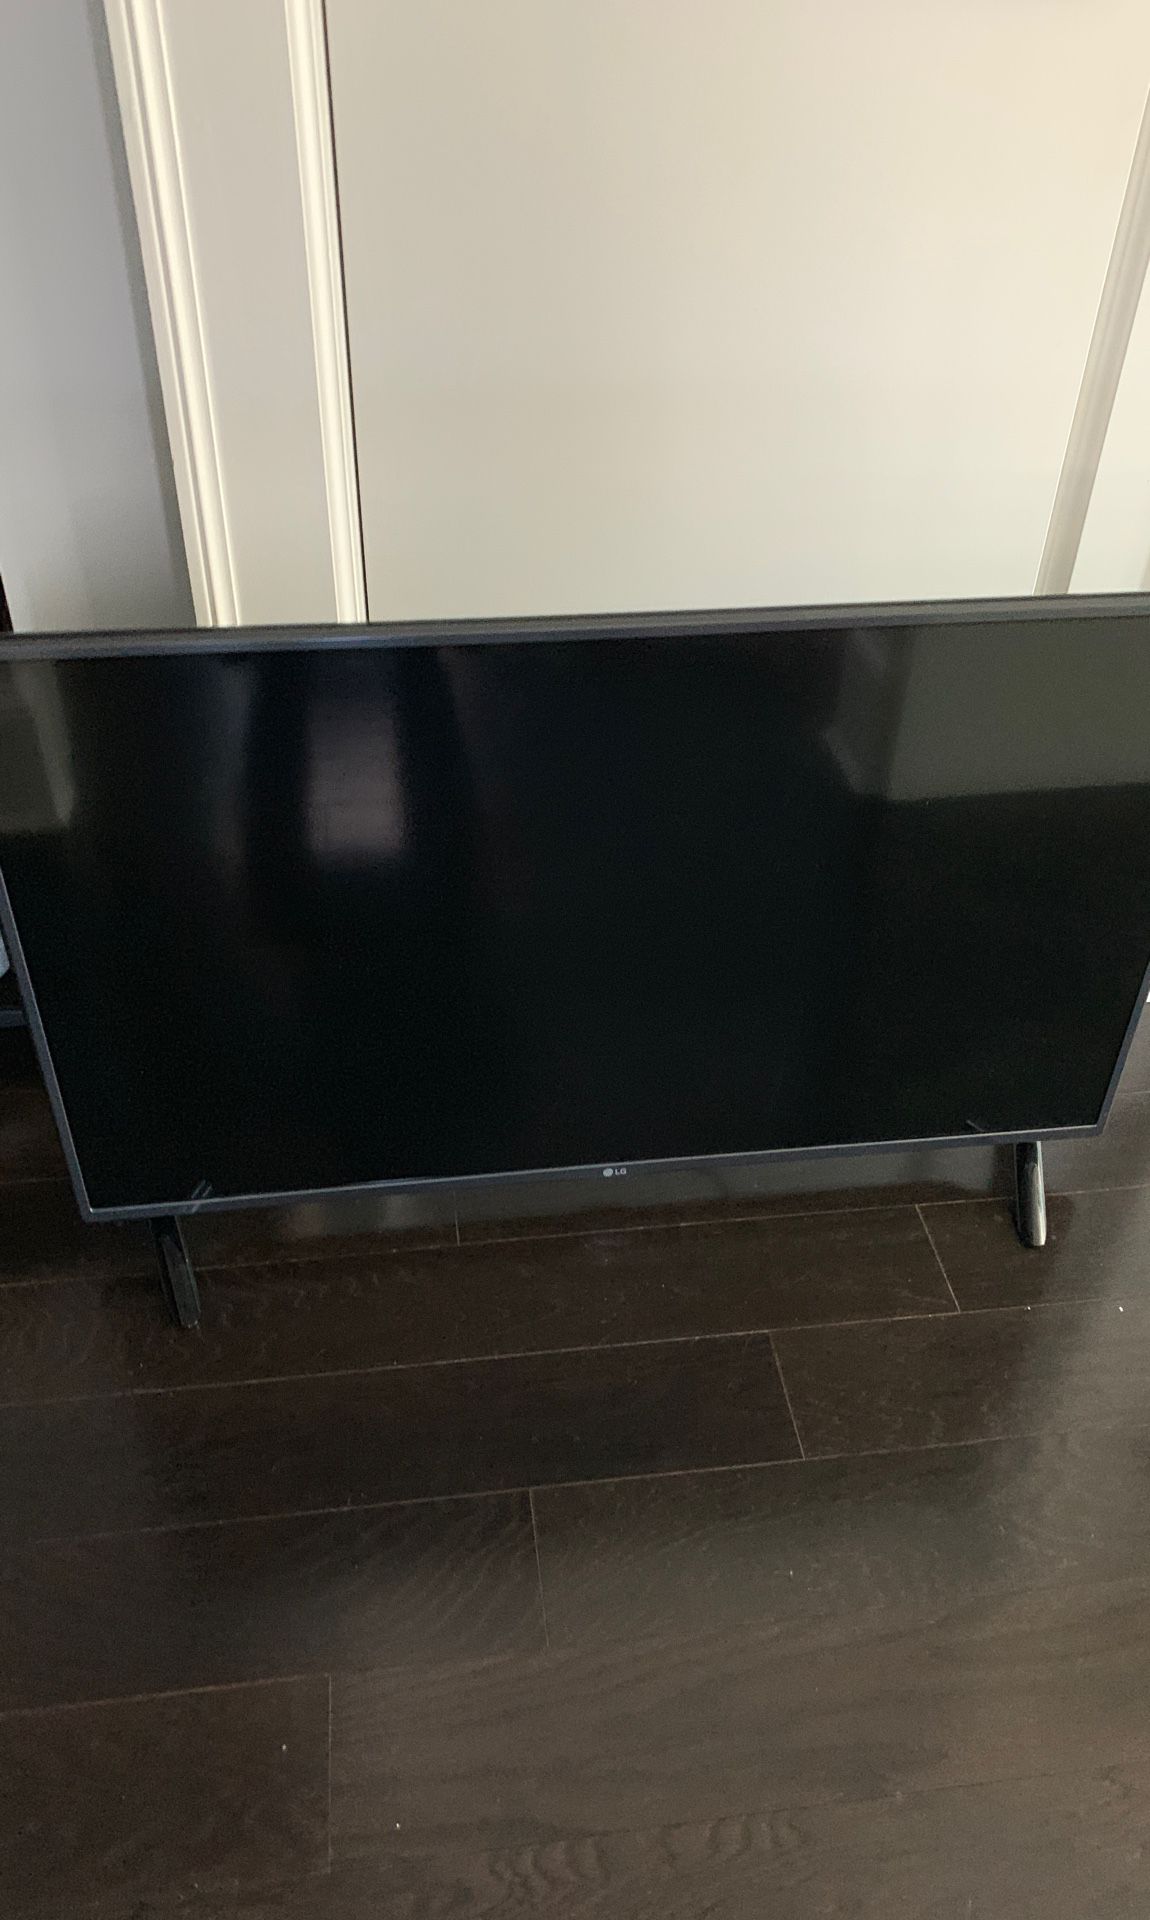 LG 42 inch TV with Roku stick